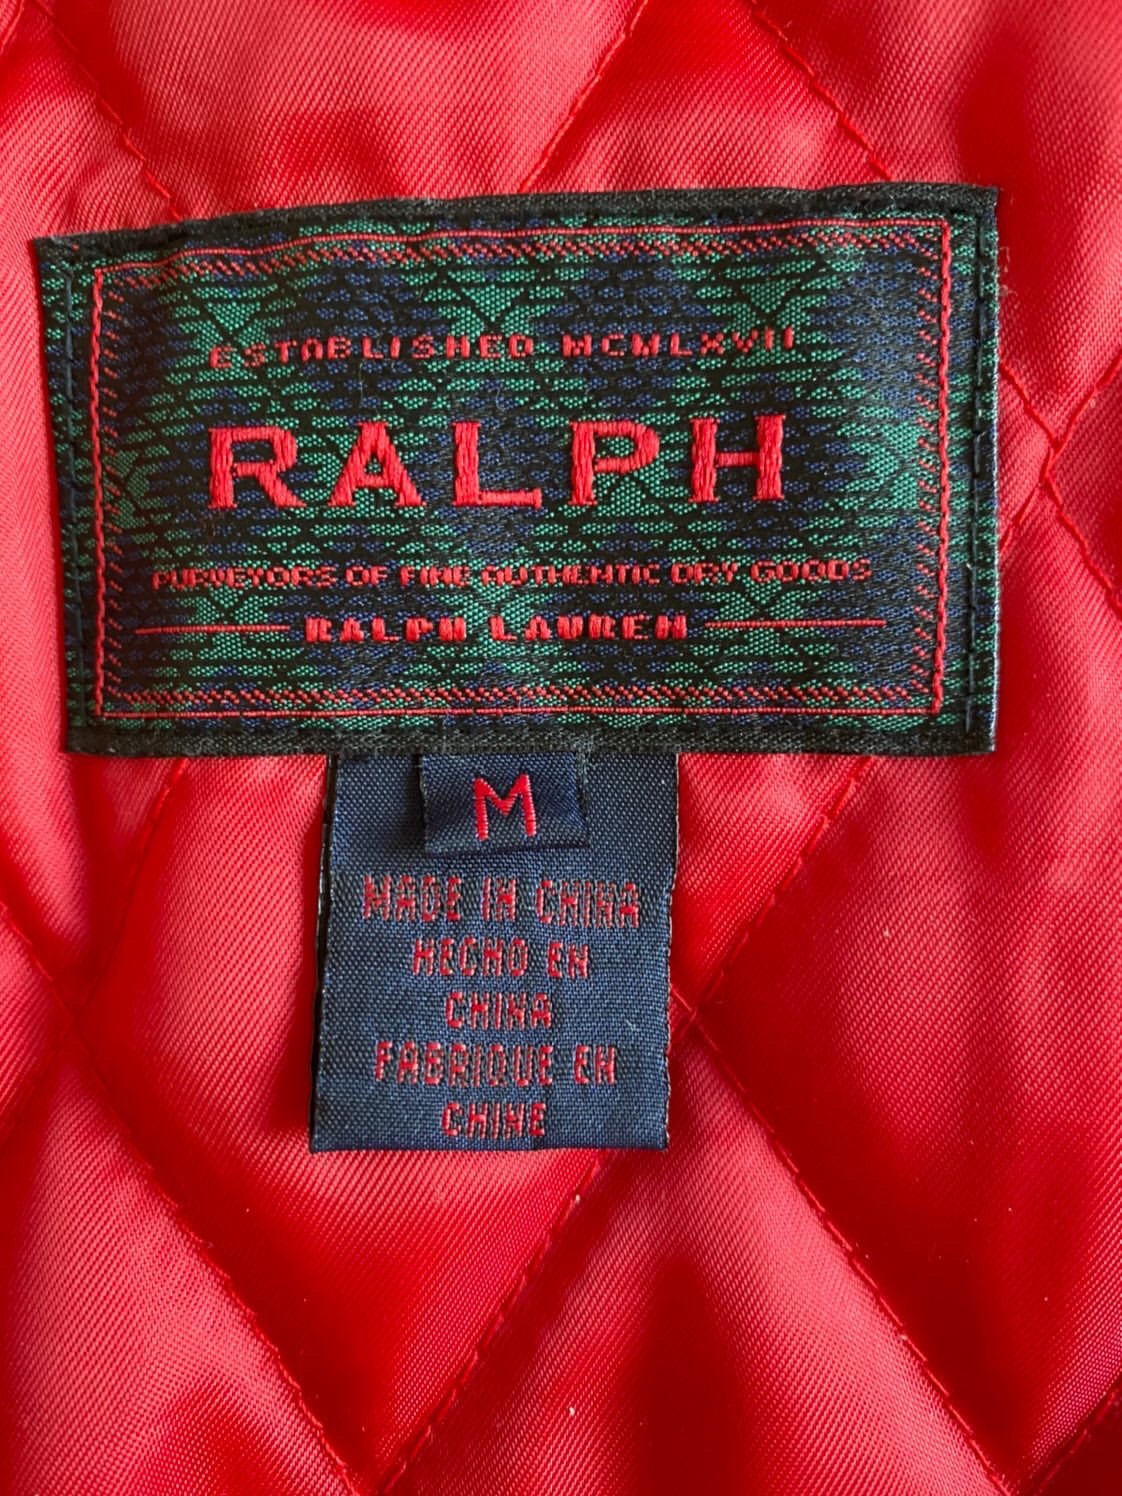 Ralph Lauren Clothing Sub-Brands 